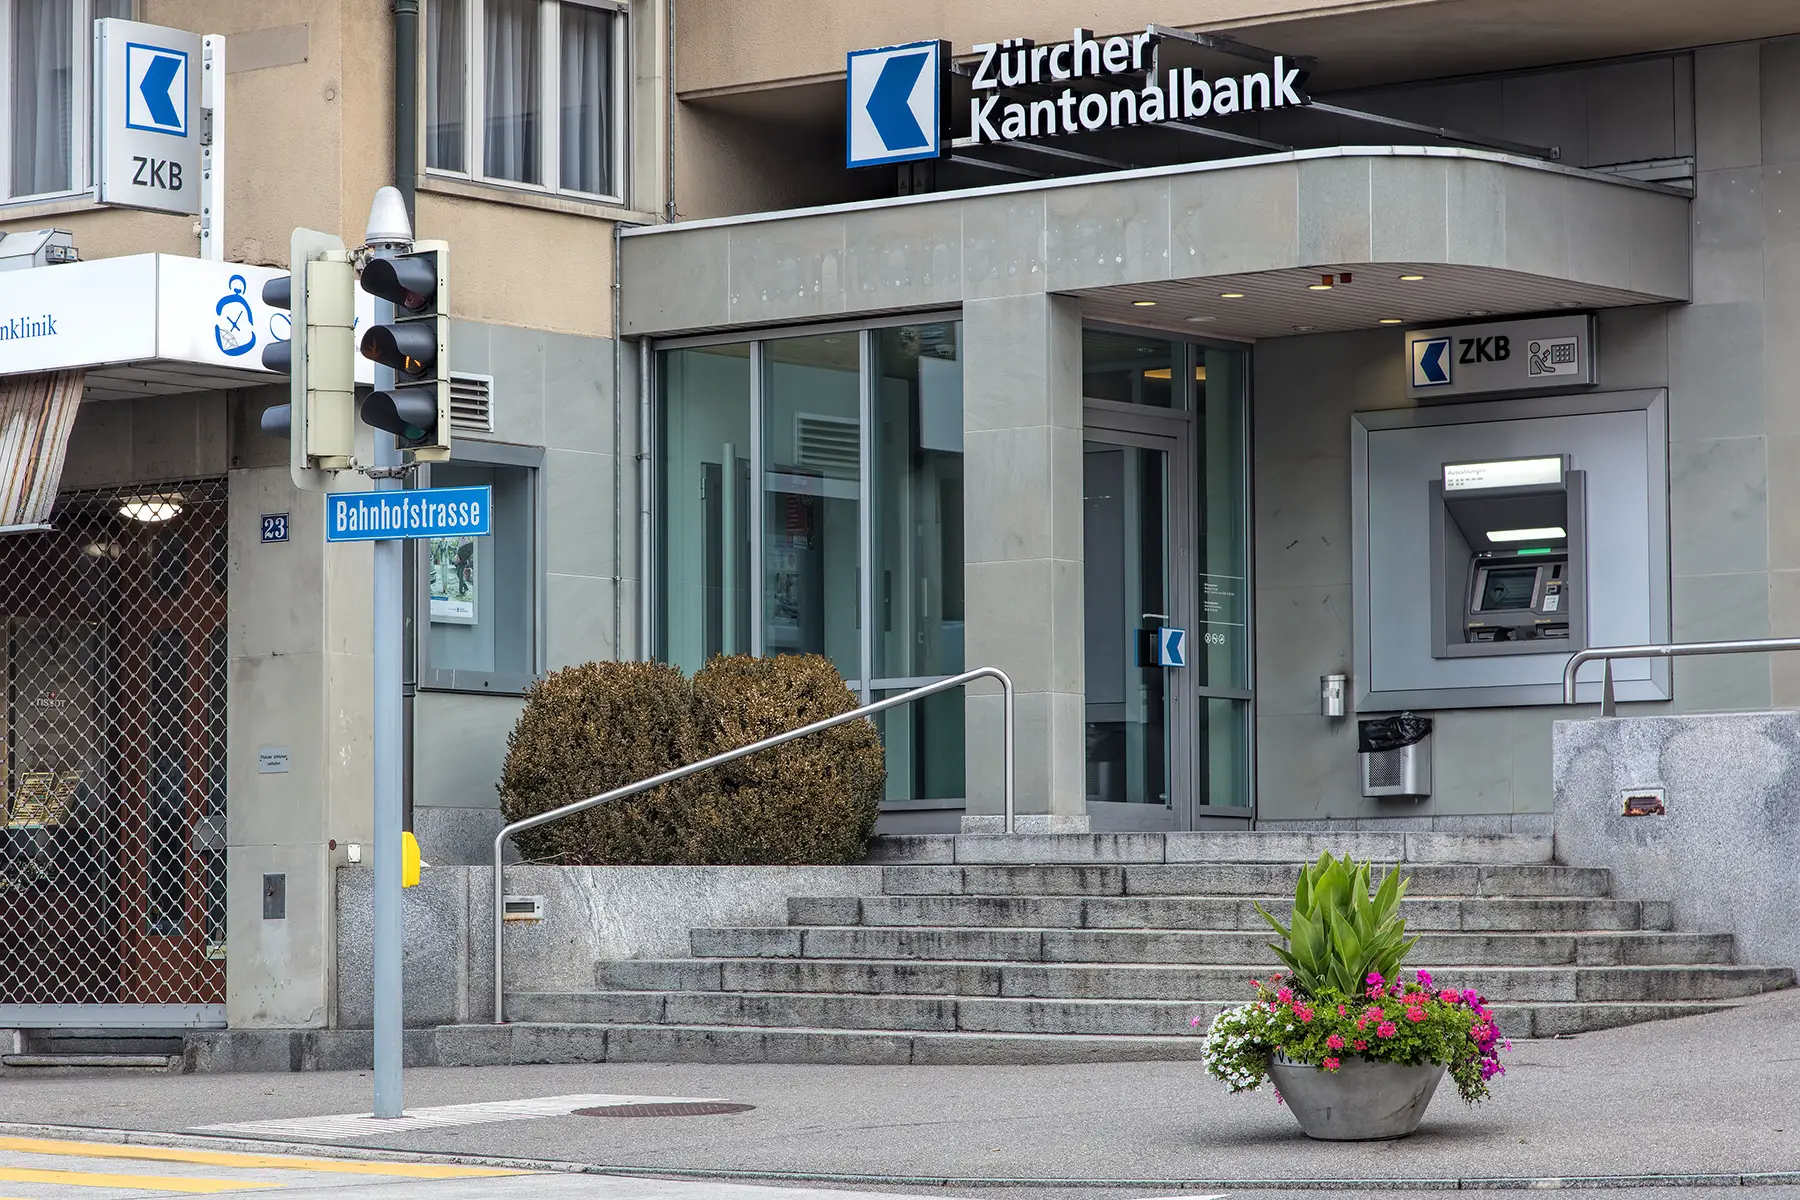 Swiss bank account